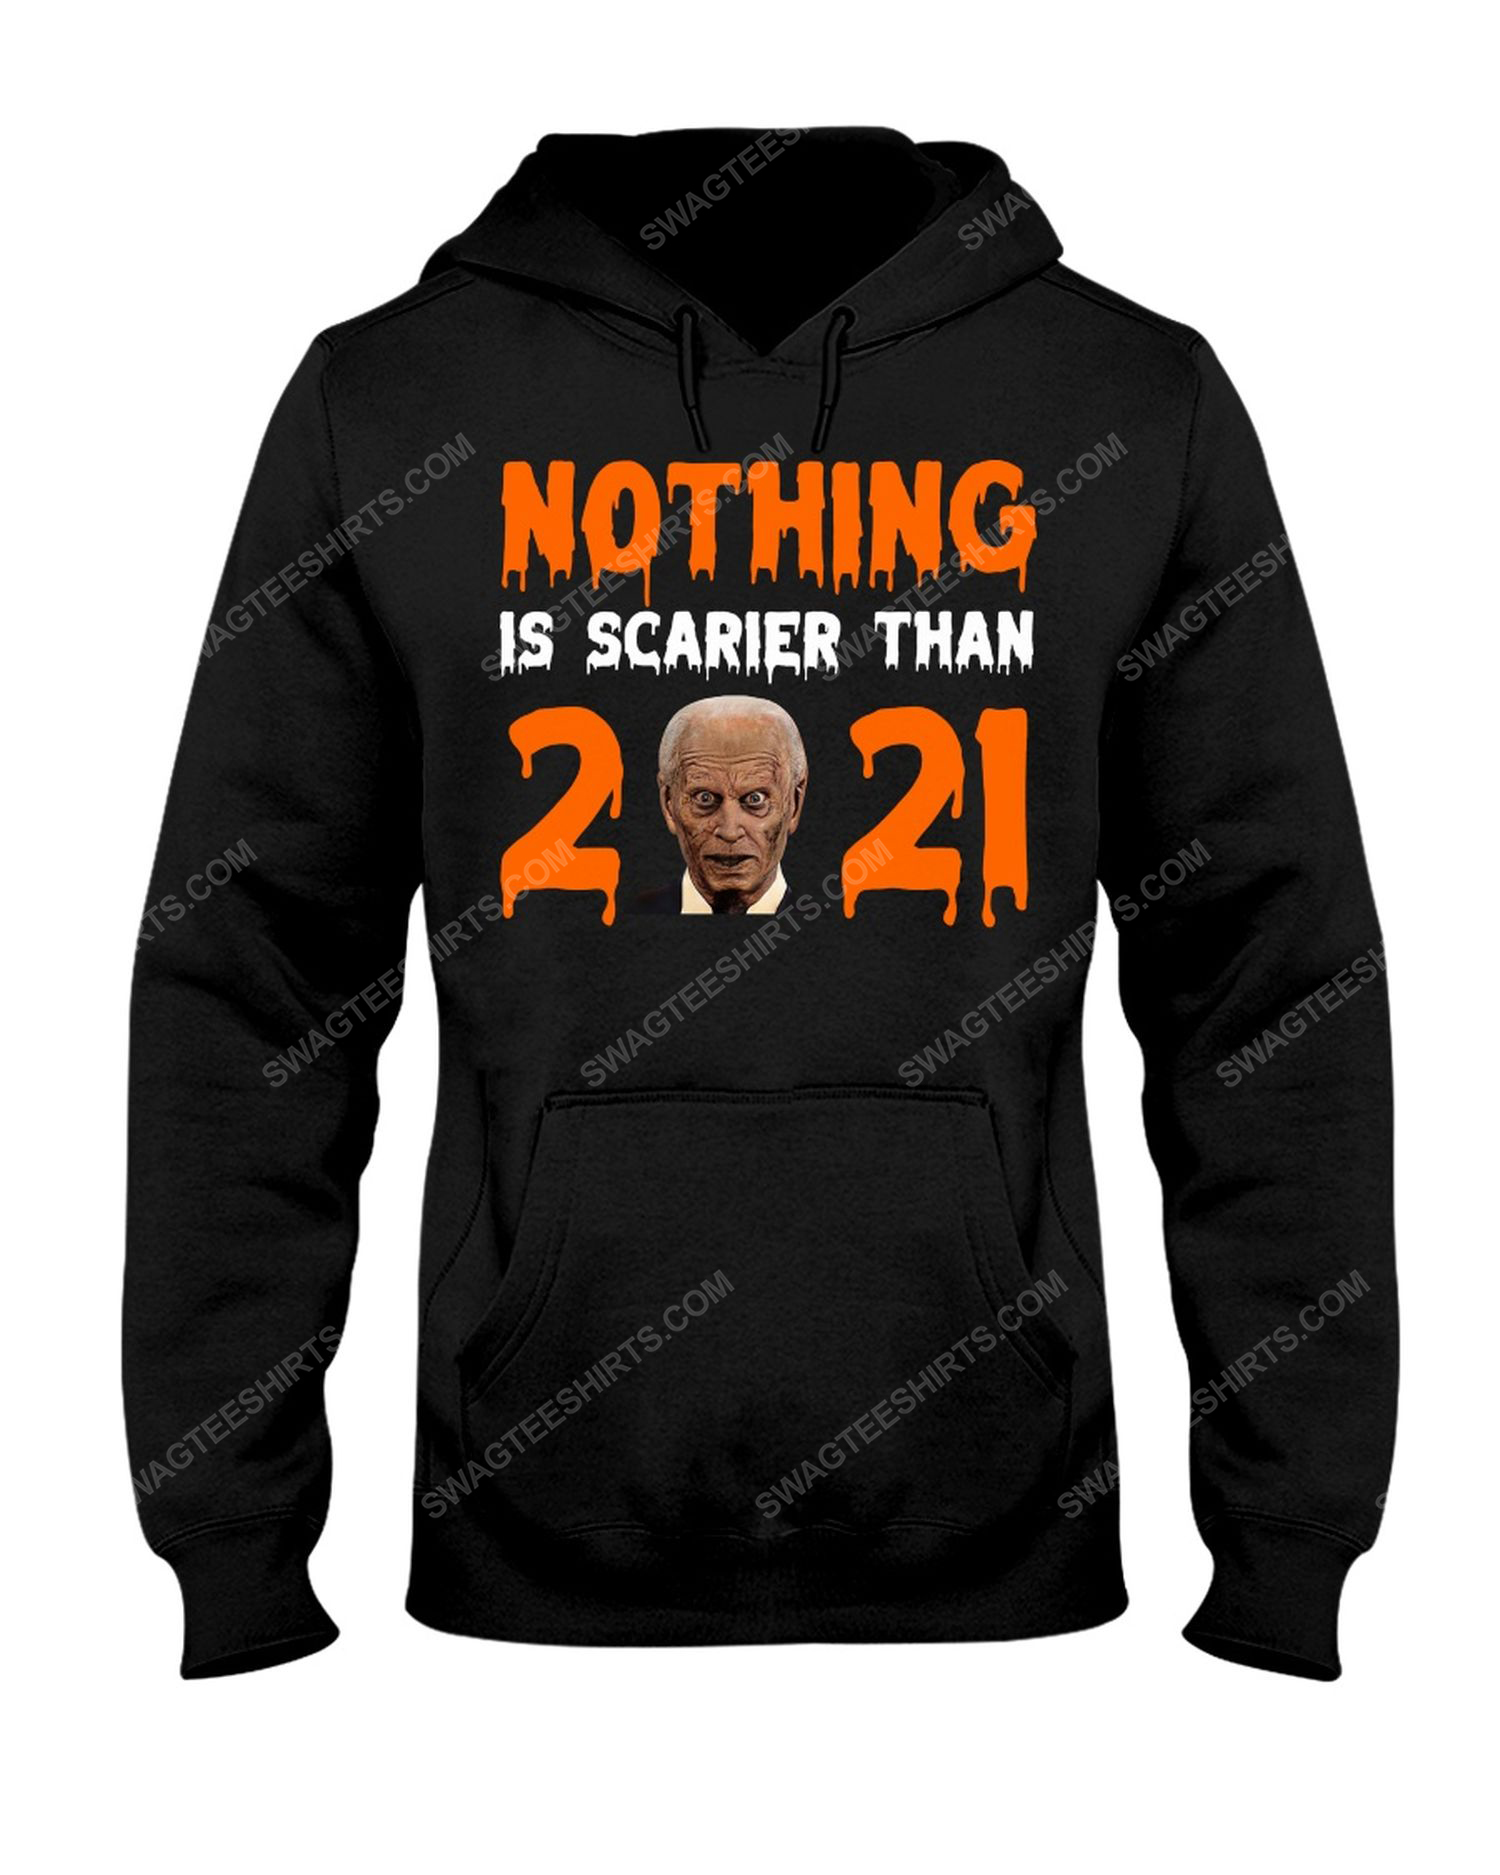 Nothing is scarier than 2021 joe biden zombie political hoodie